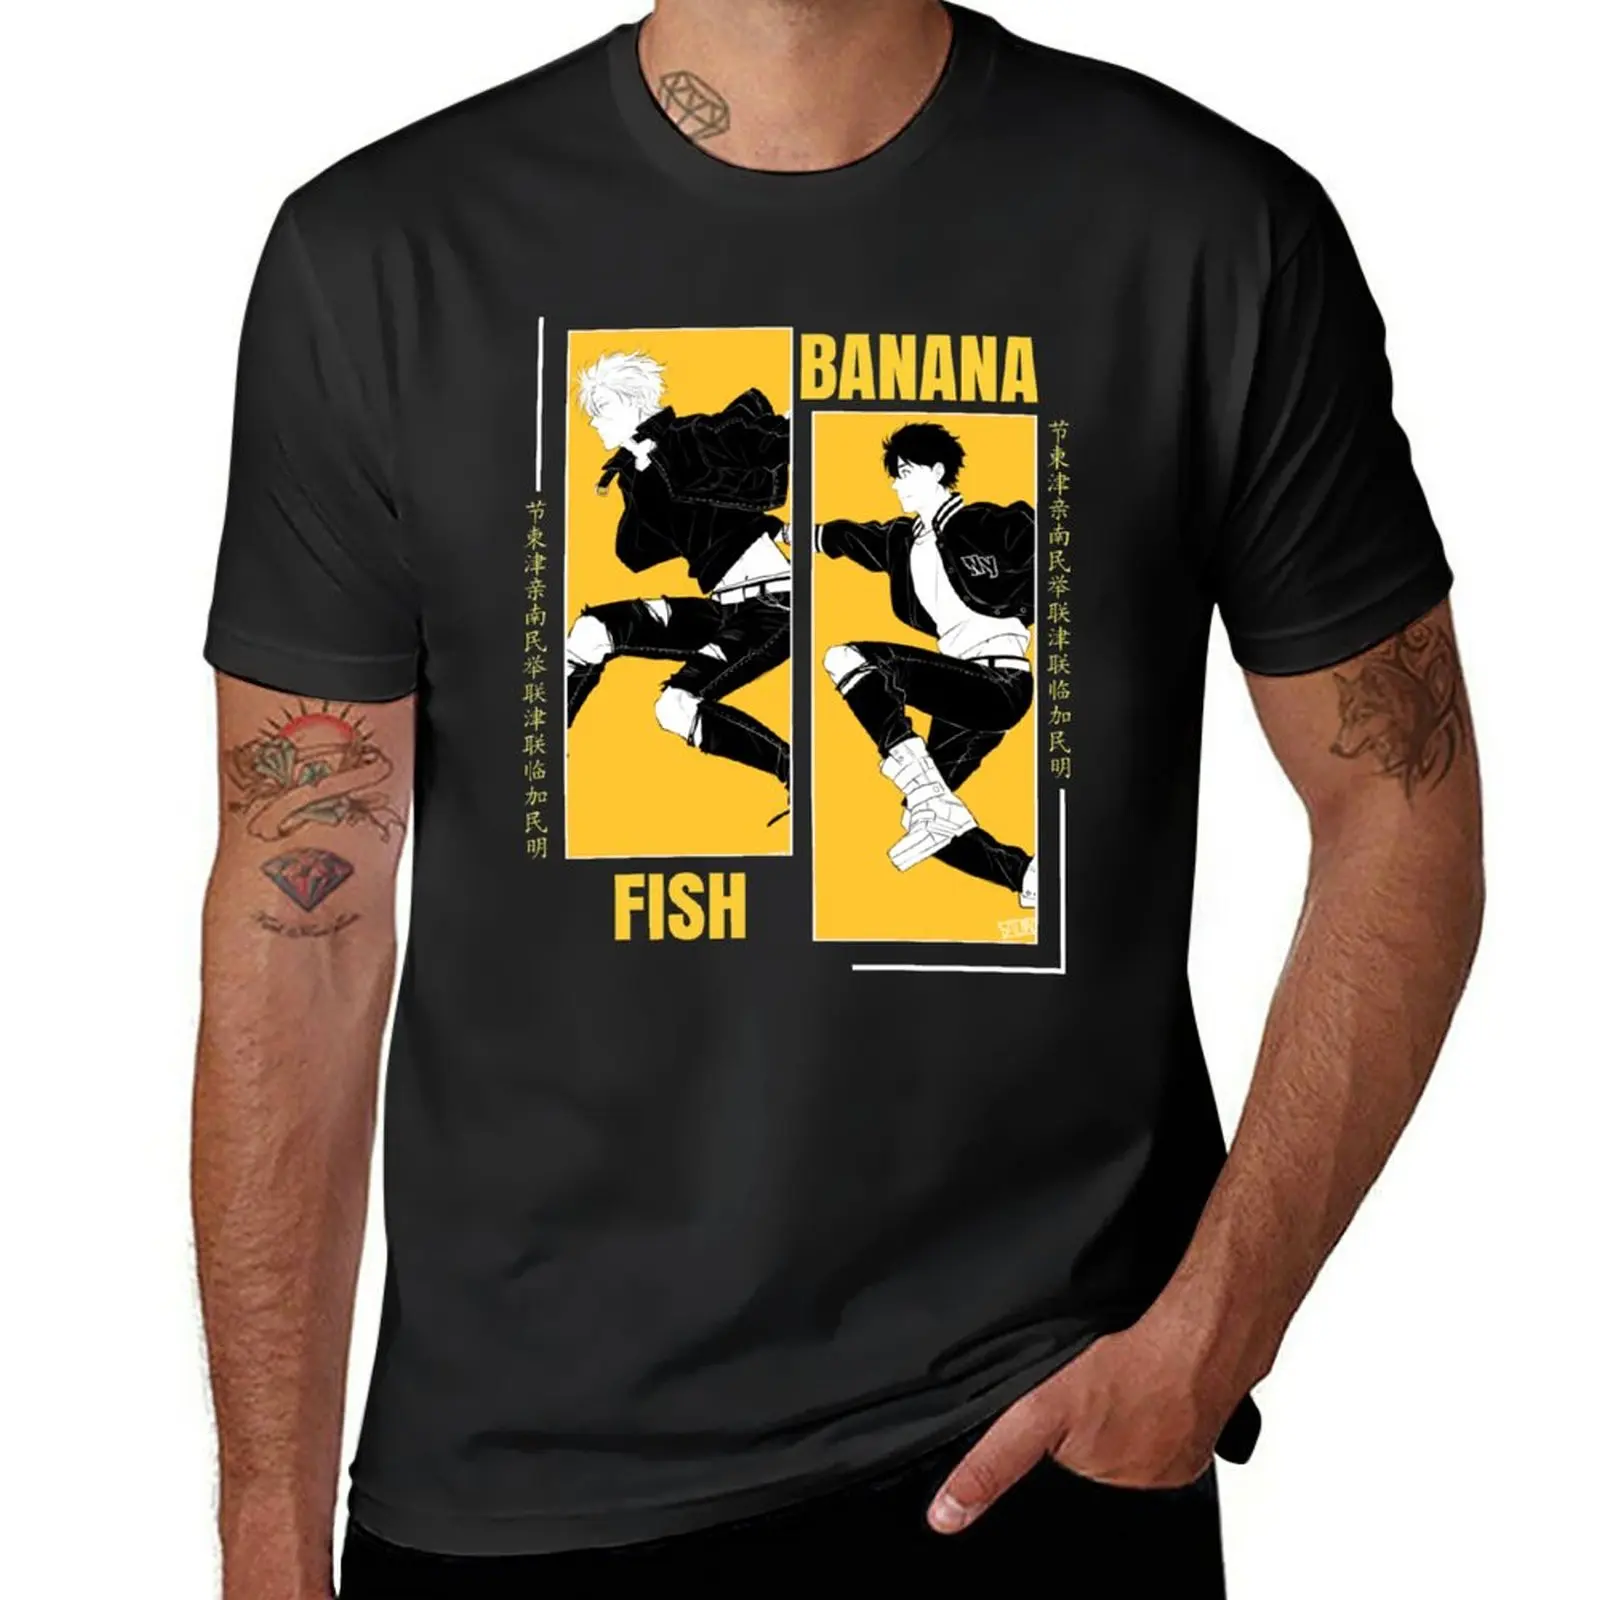 Banana fish T-Shirt t-shirts man customized t shirts slim fit t shirts for men